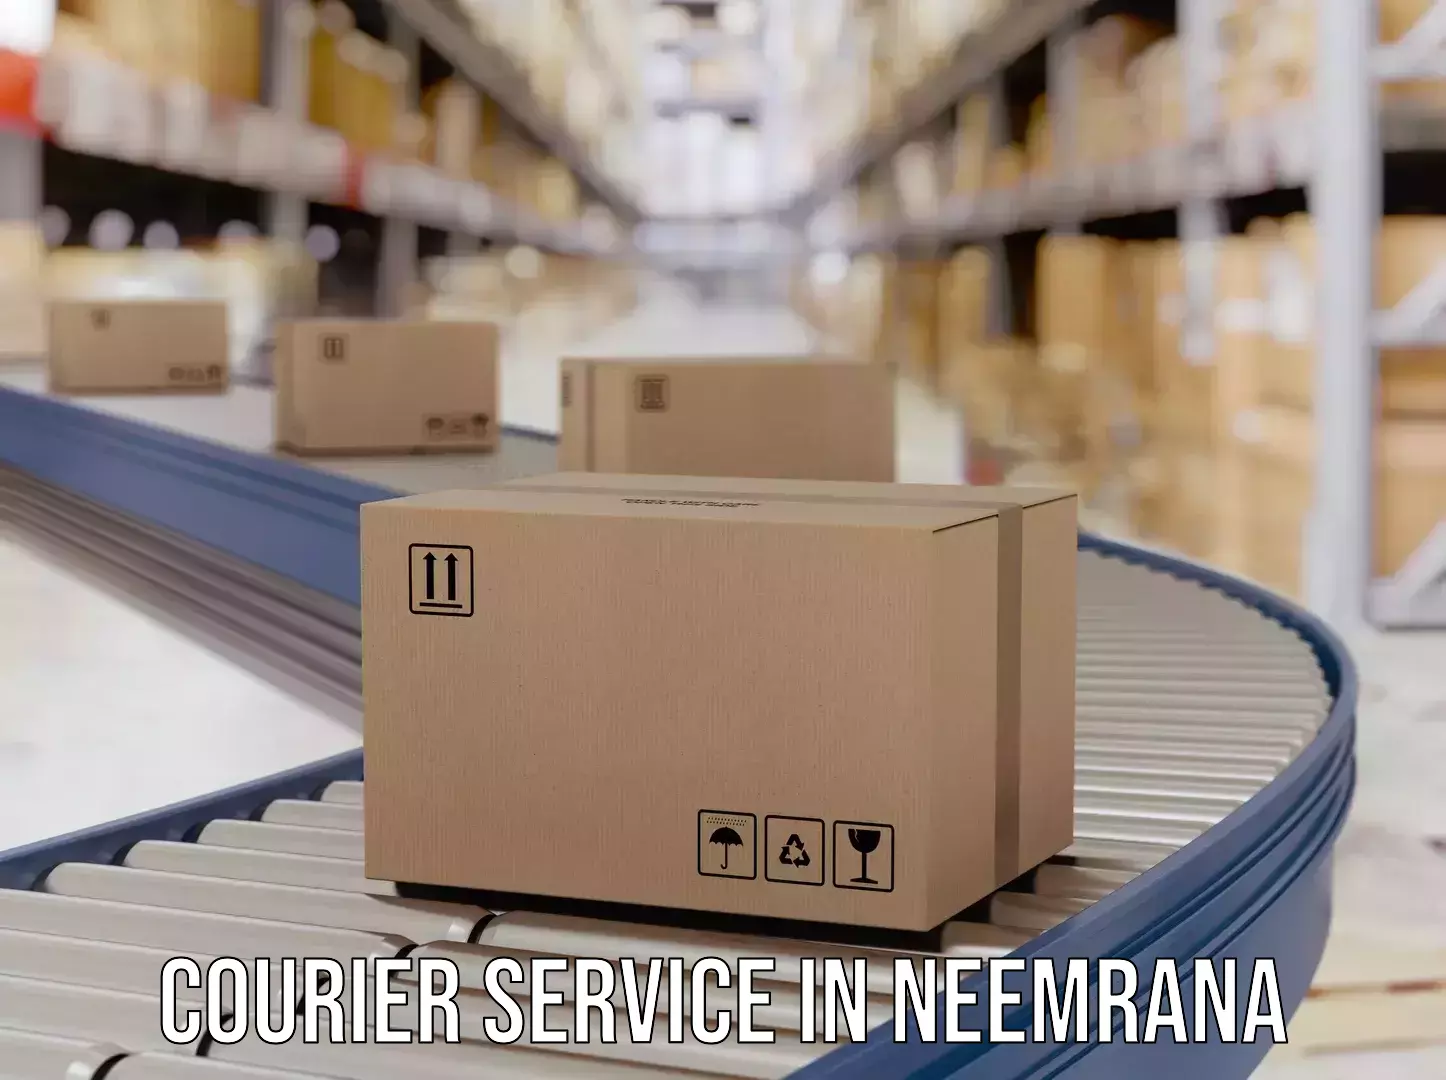 High-priority parcel service in Neemrana